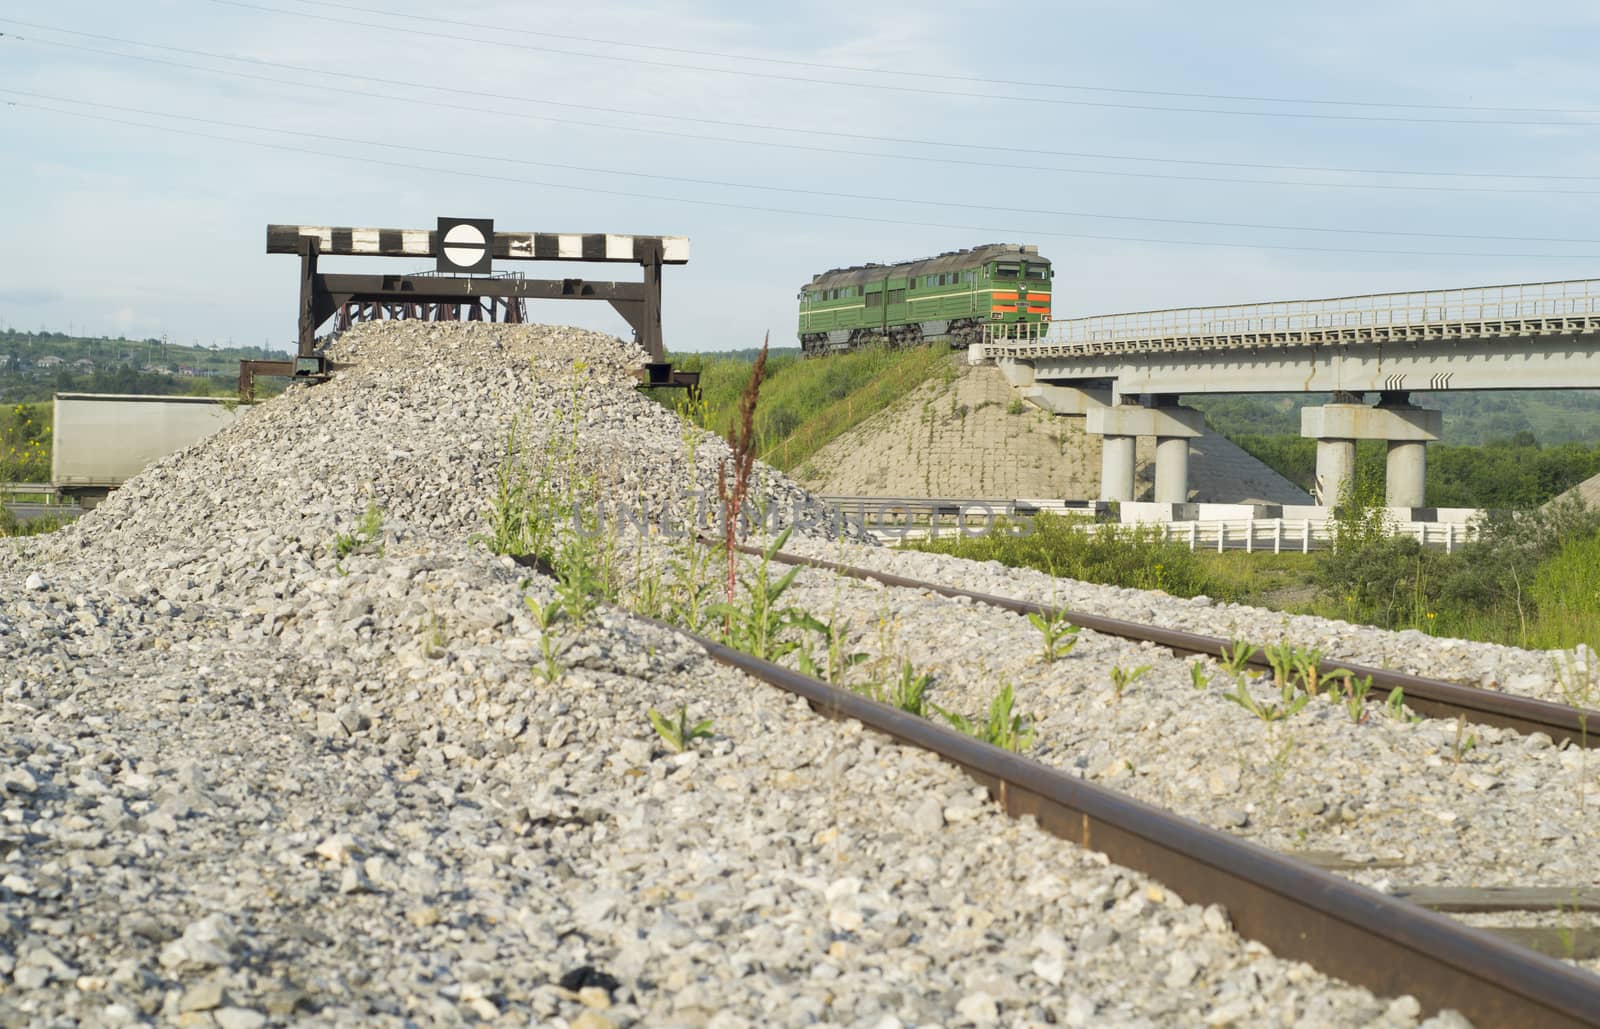 Railway impasse on the railroad tracks. View of the bridge with a railway locomotive